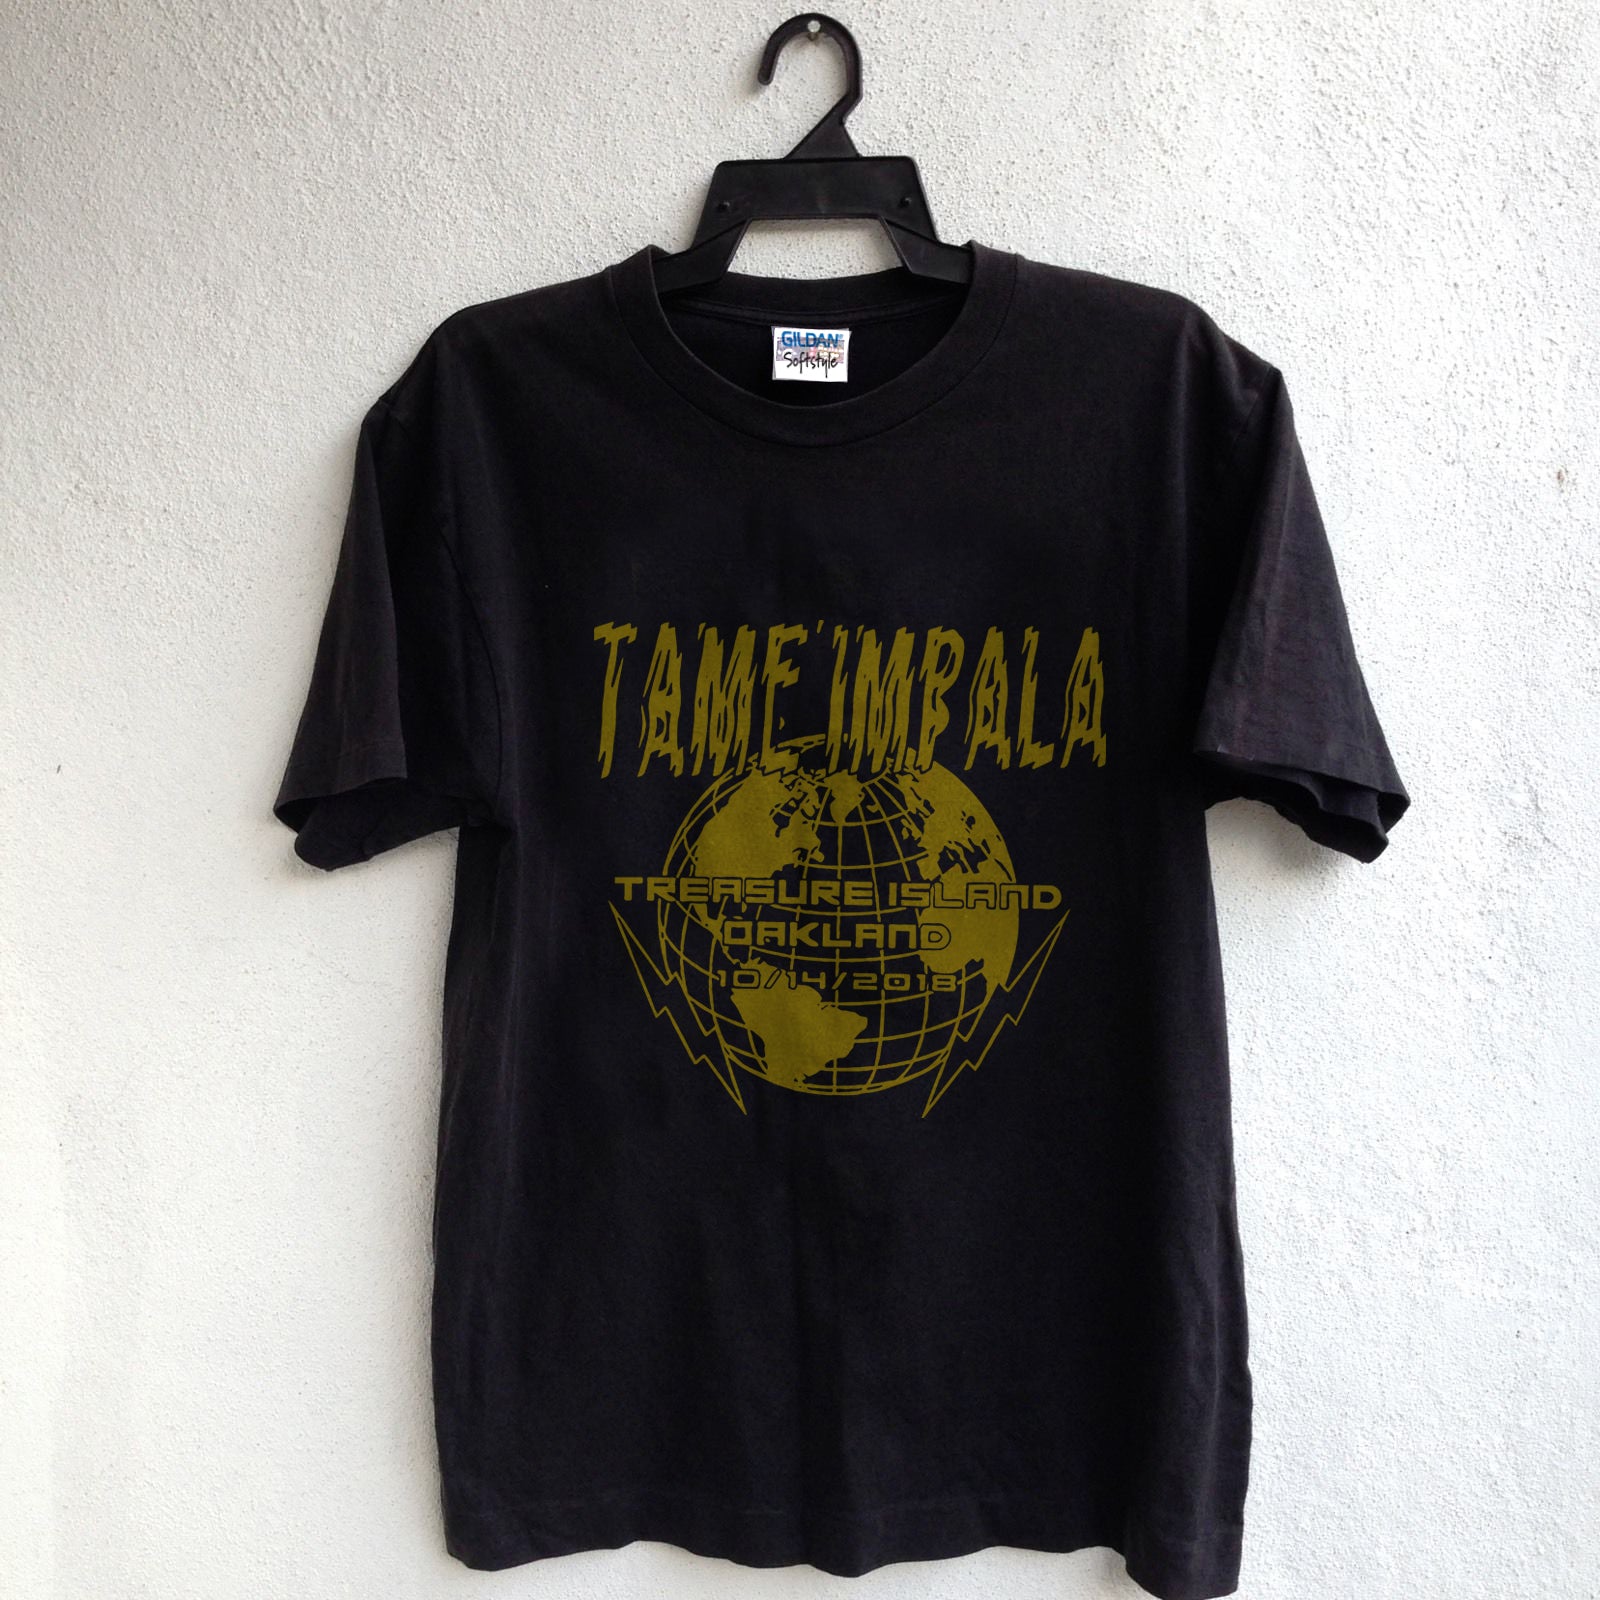 Tame Impala Treasure island oakland 10 14 2018 Tour shirt